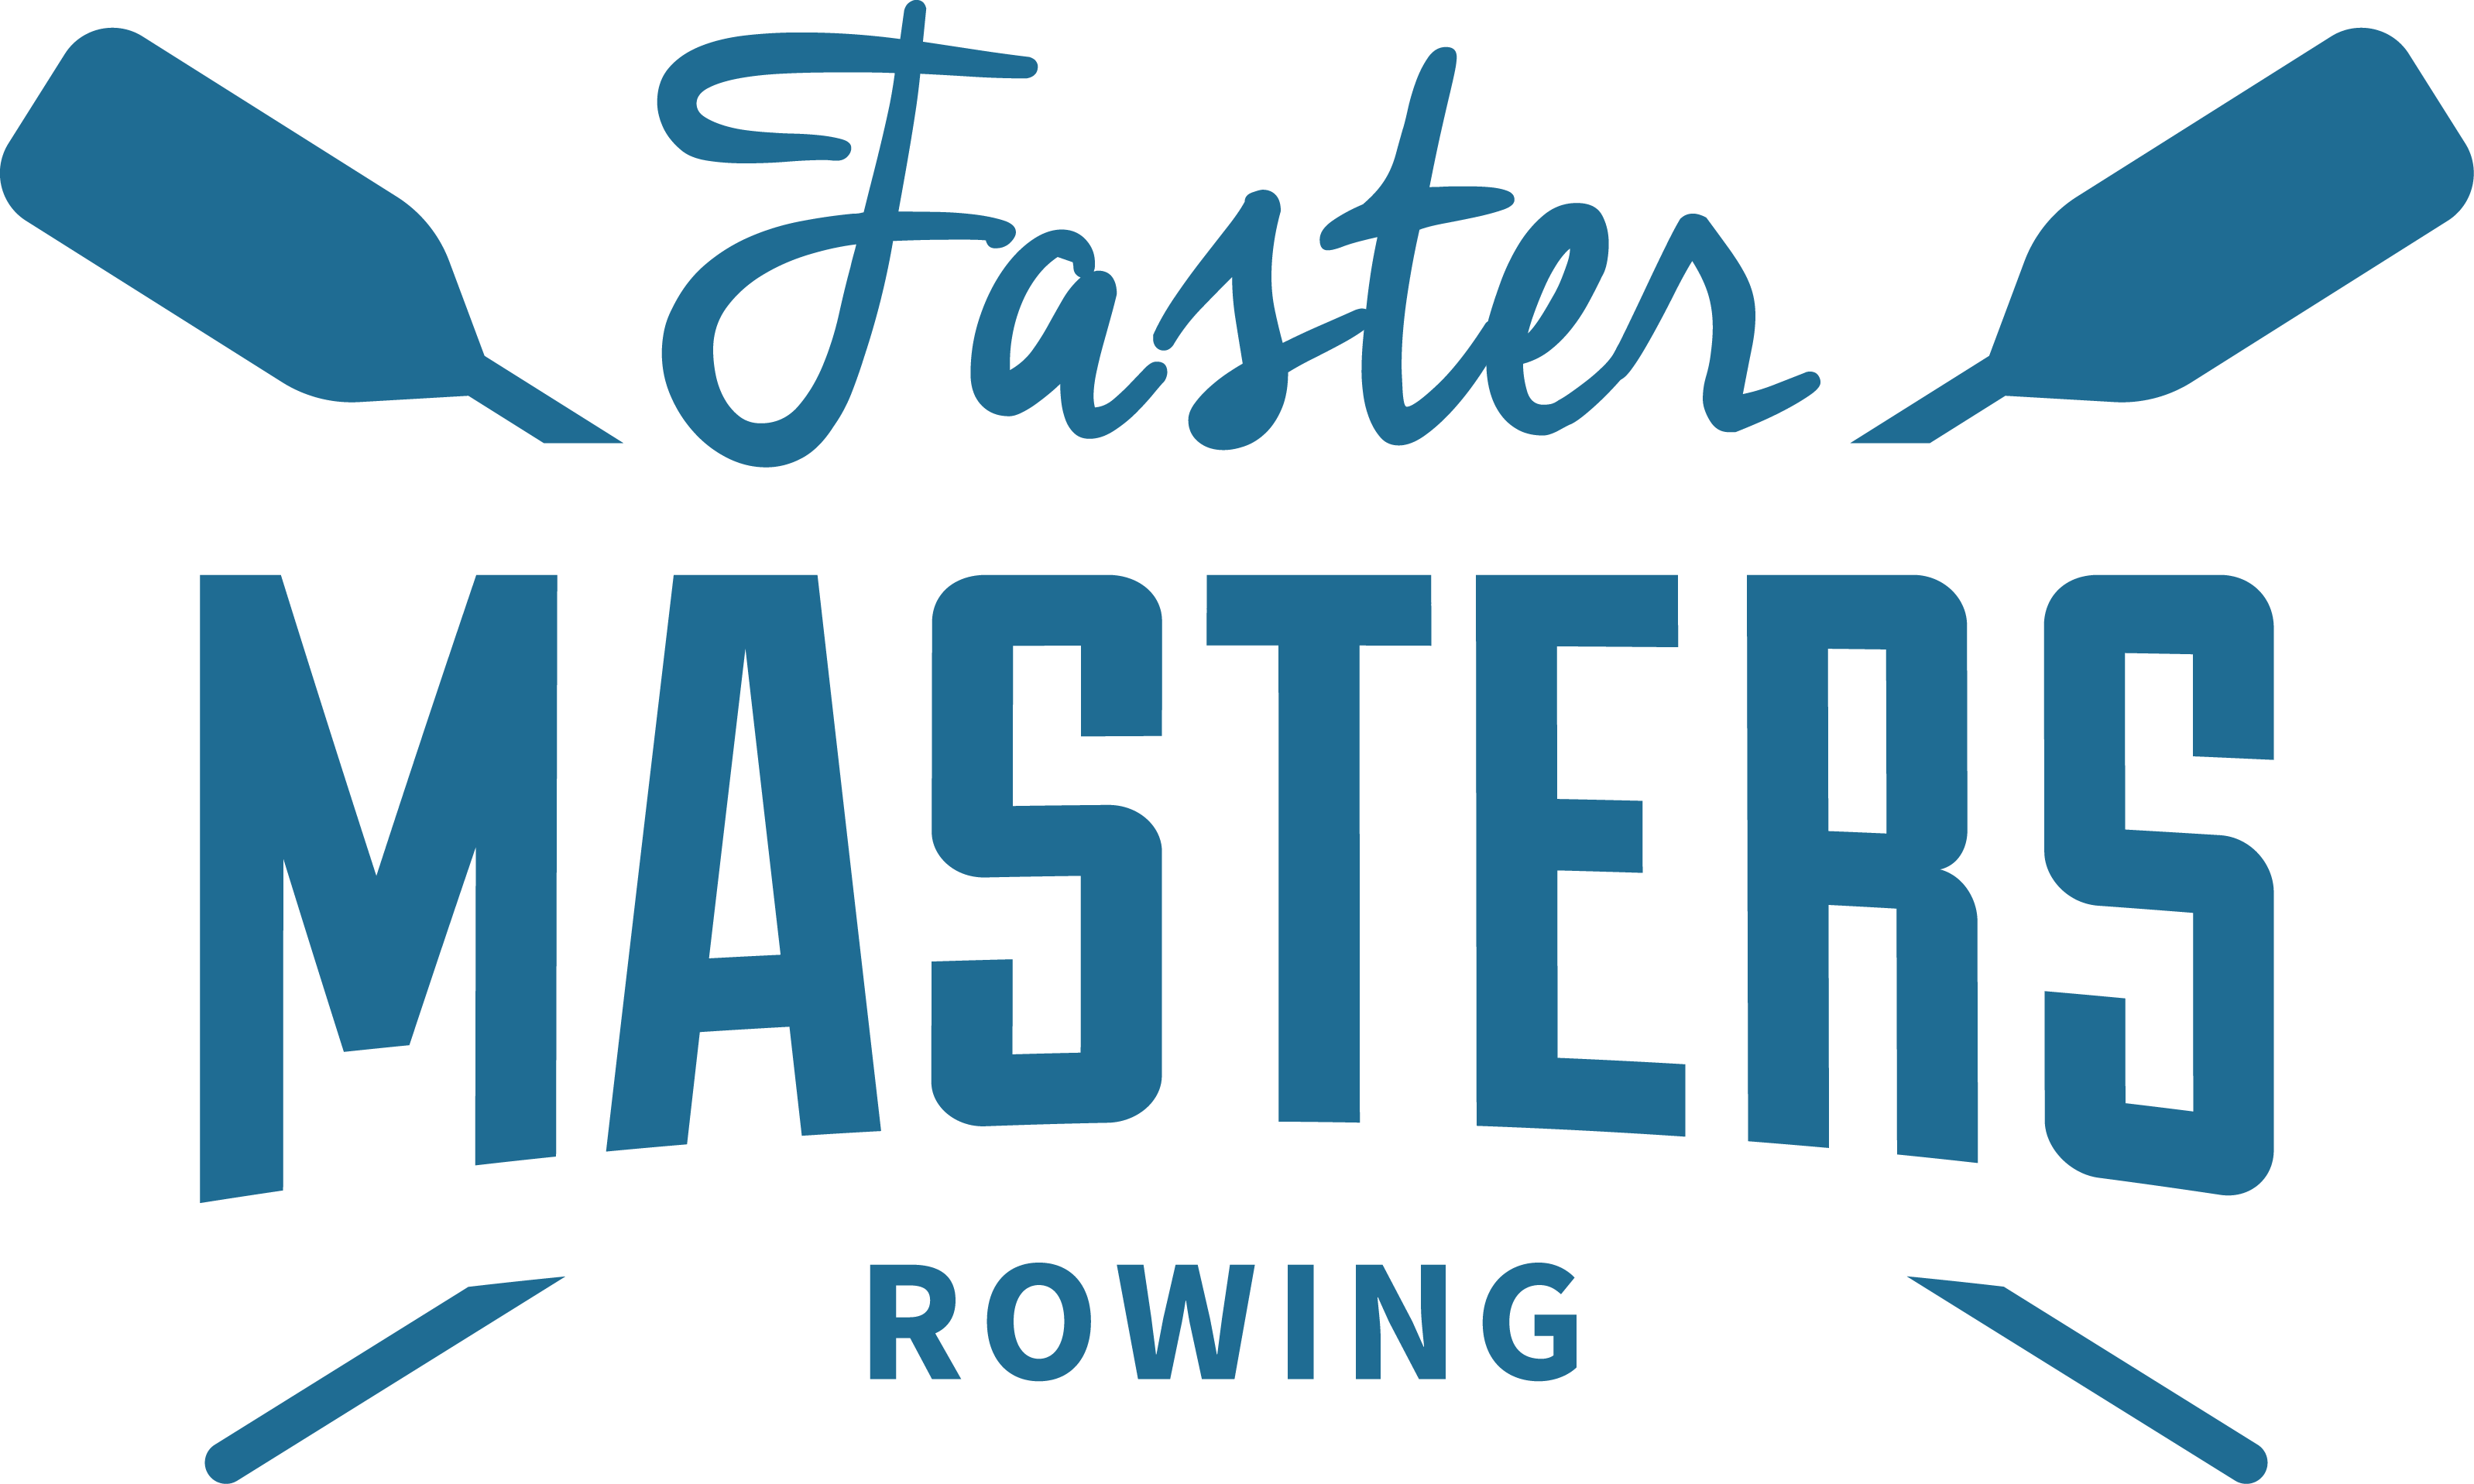 Master fast logo. Rowing logo. Radio Row.